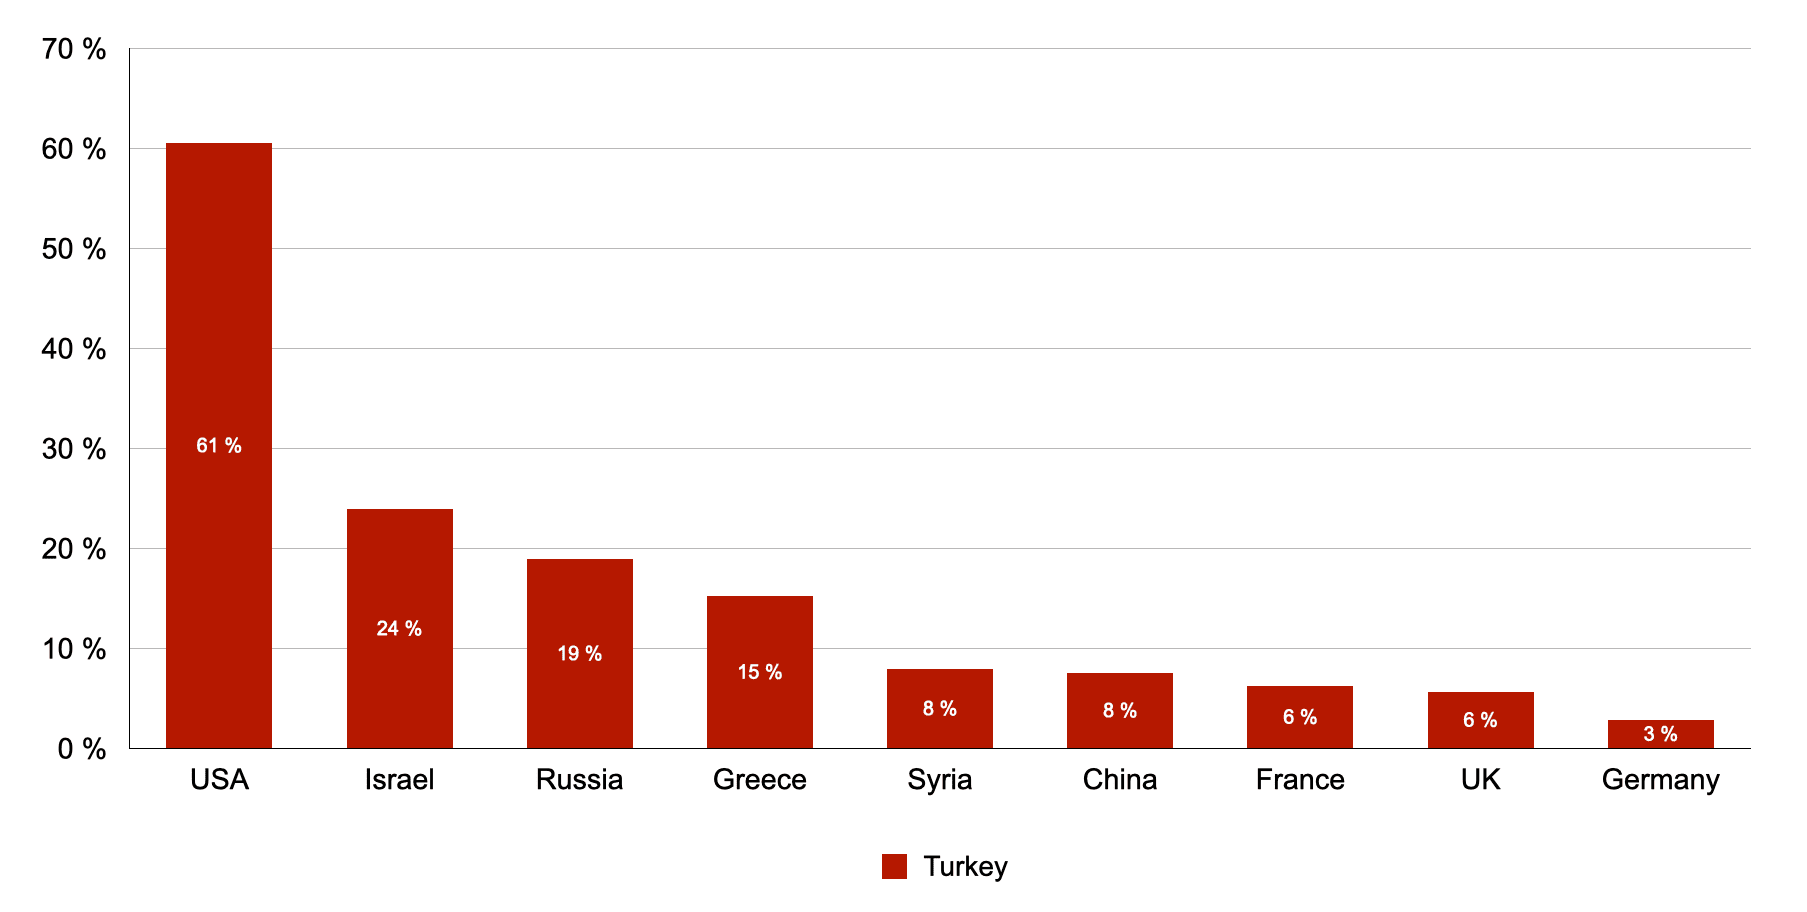 USA 61%, Israel 24%, Russia 19%, Greece 15%, Syria 8%, China 8%, France 6%, UK 6%, Germany 3%